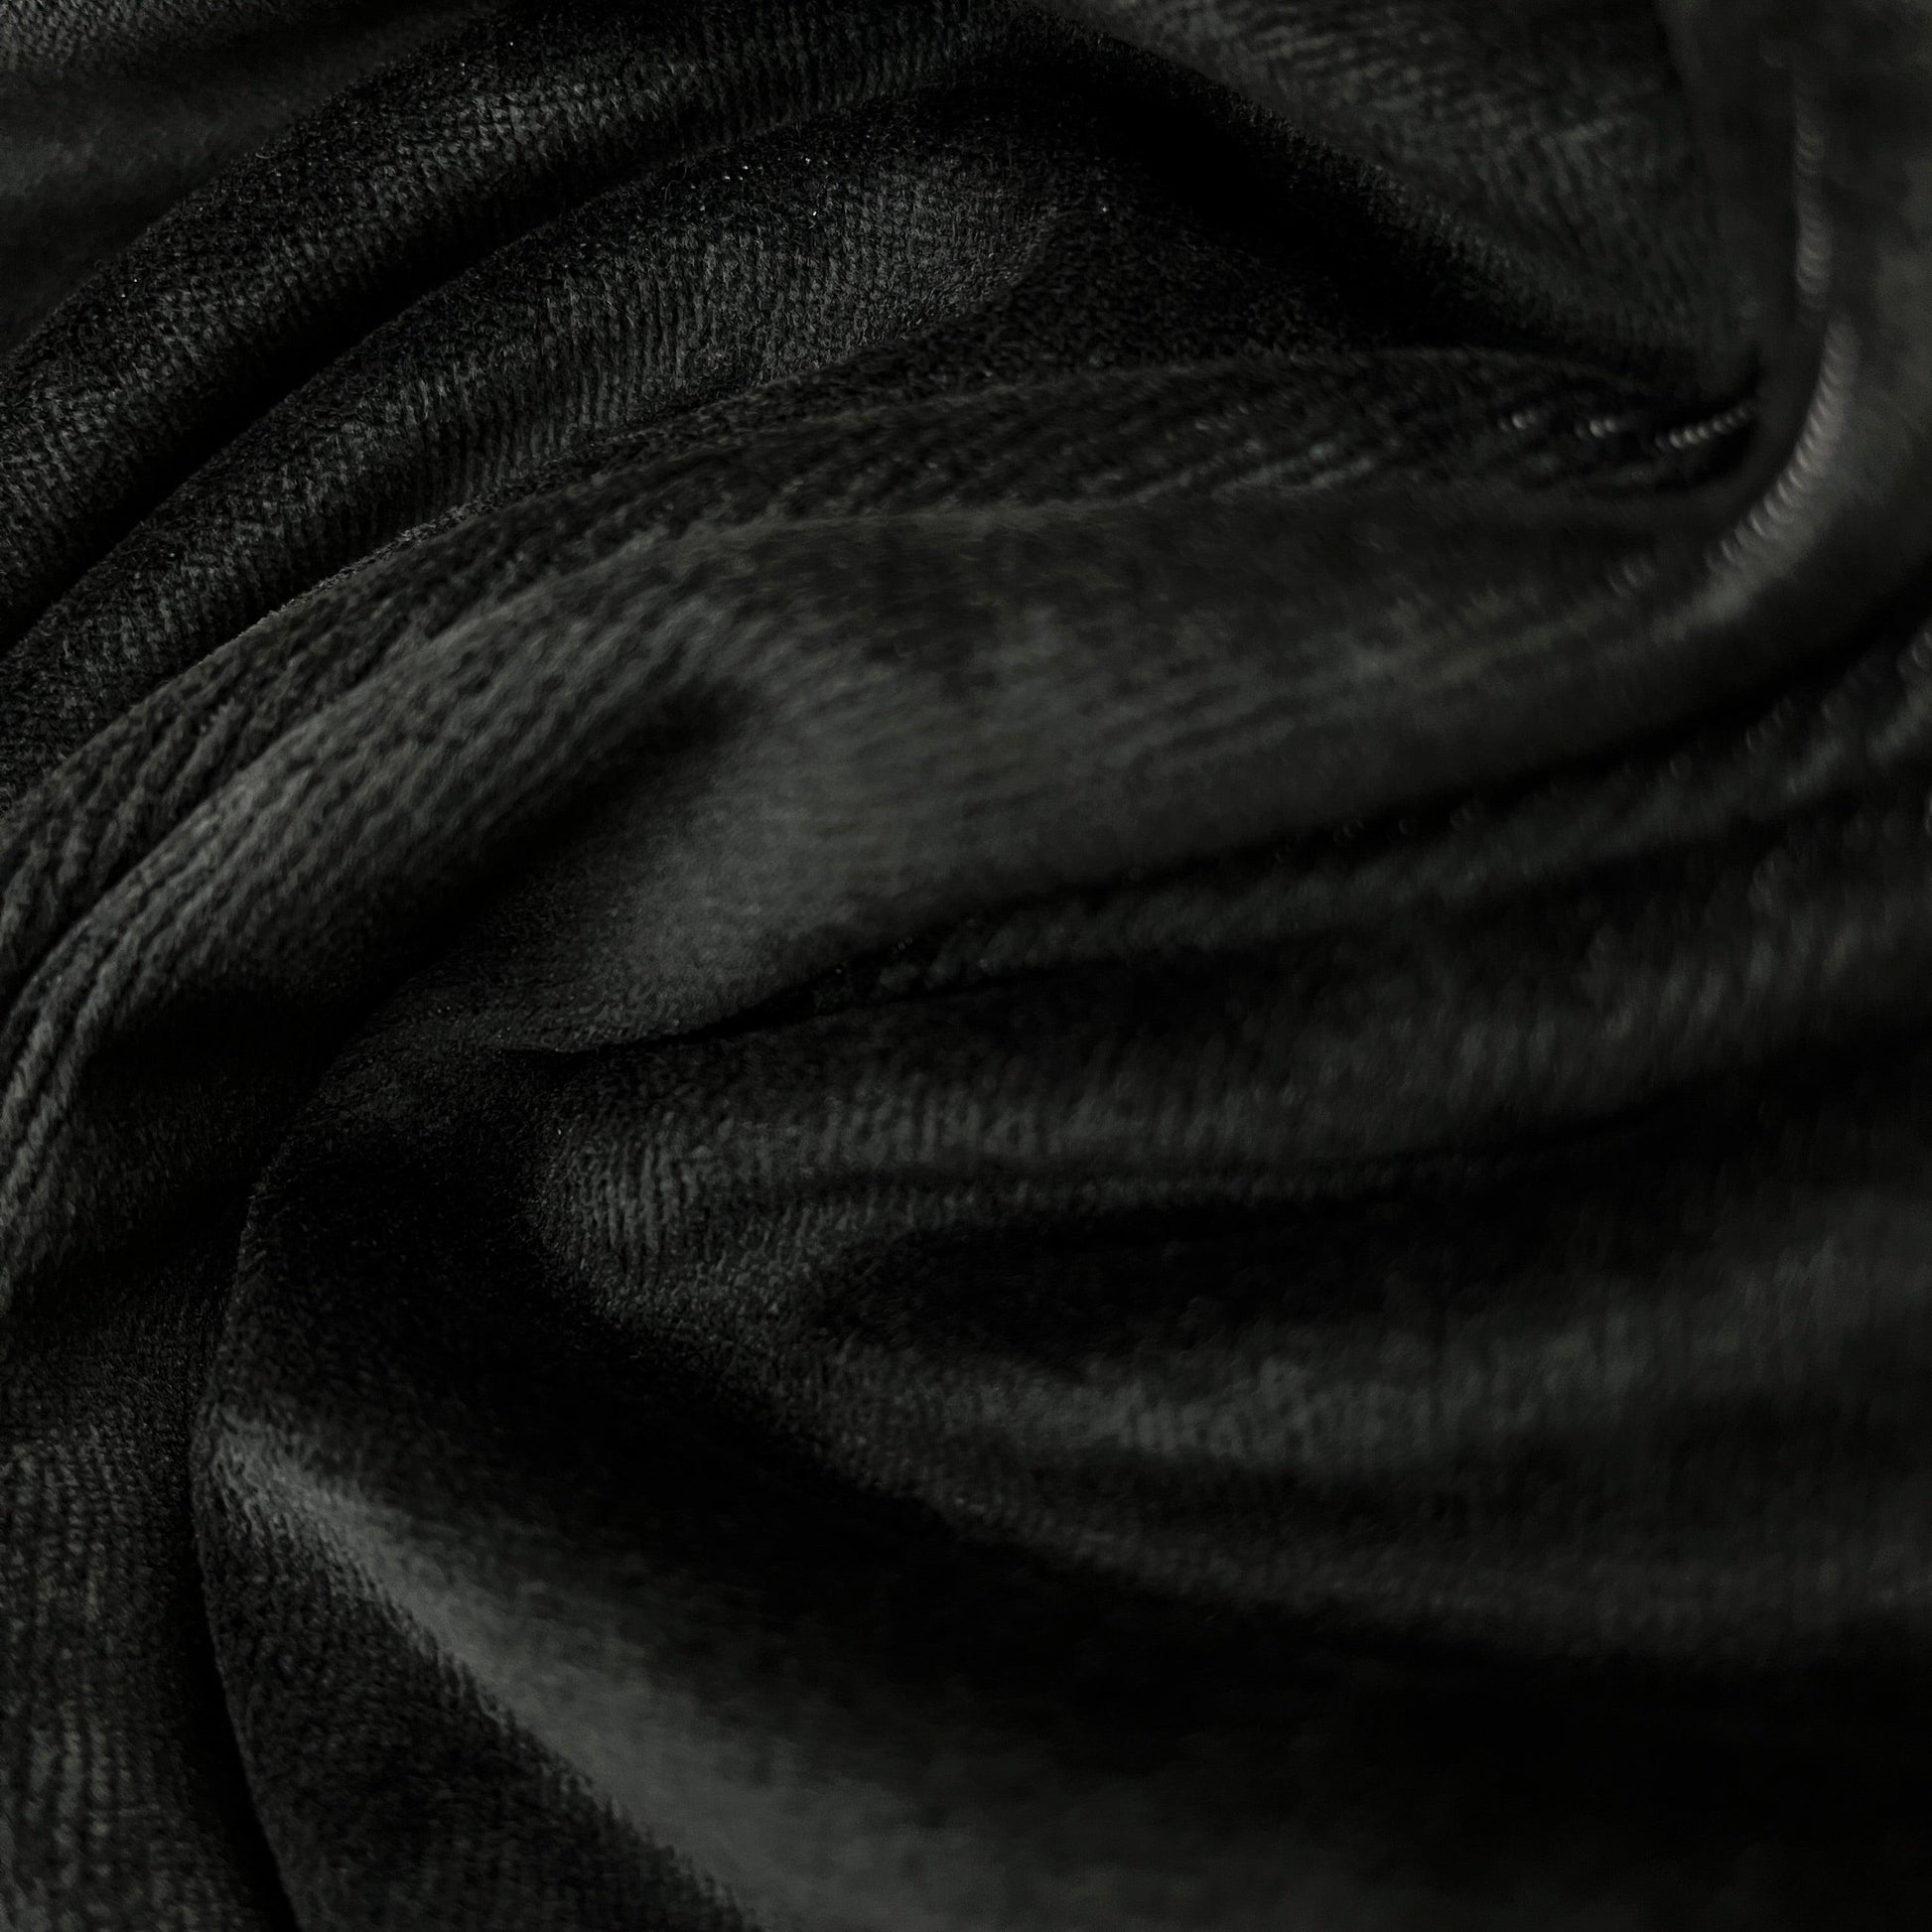 Black Fabric, Bamboo Fabric, Velour Fabric